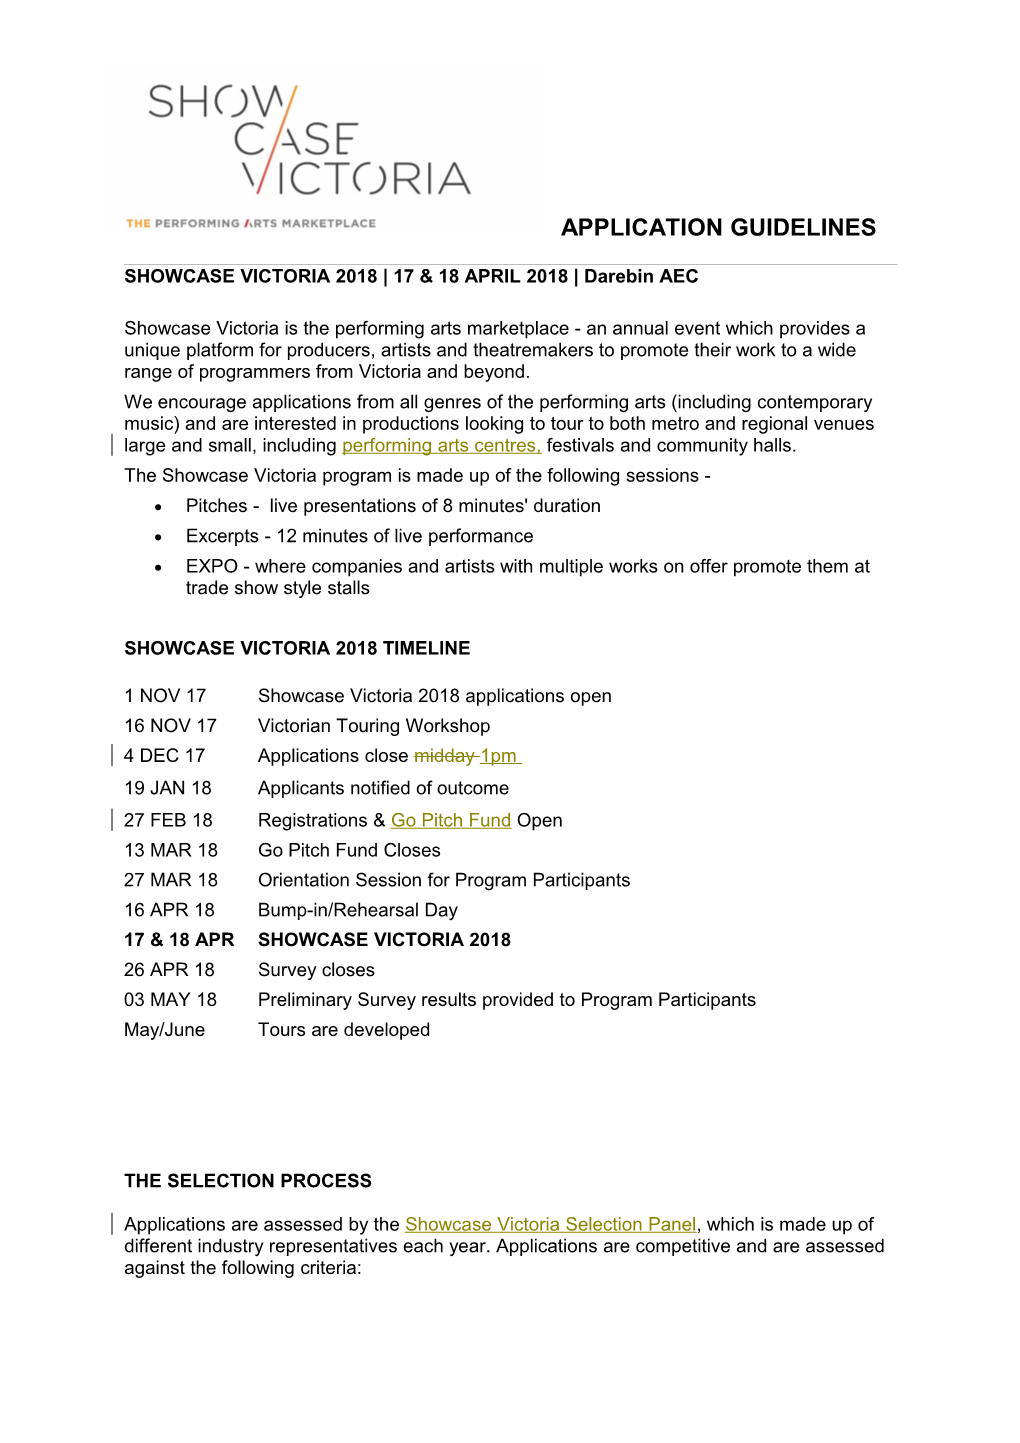 Showcase Victoria 2018 Application Guidelines